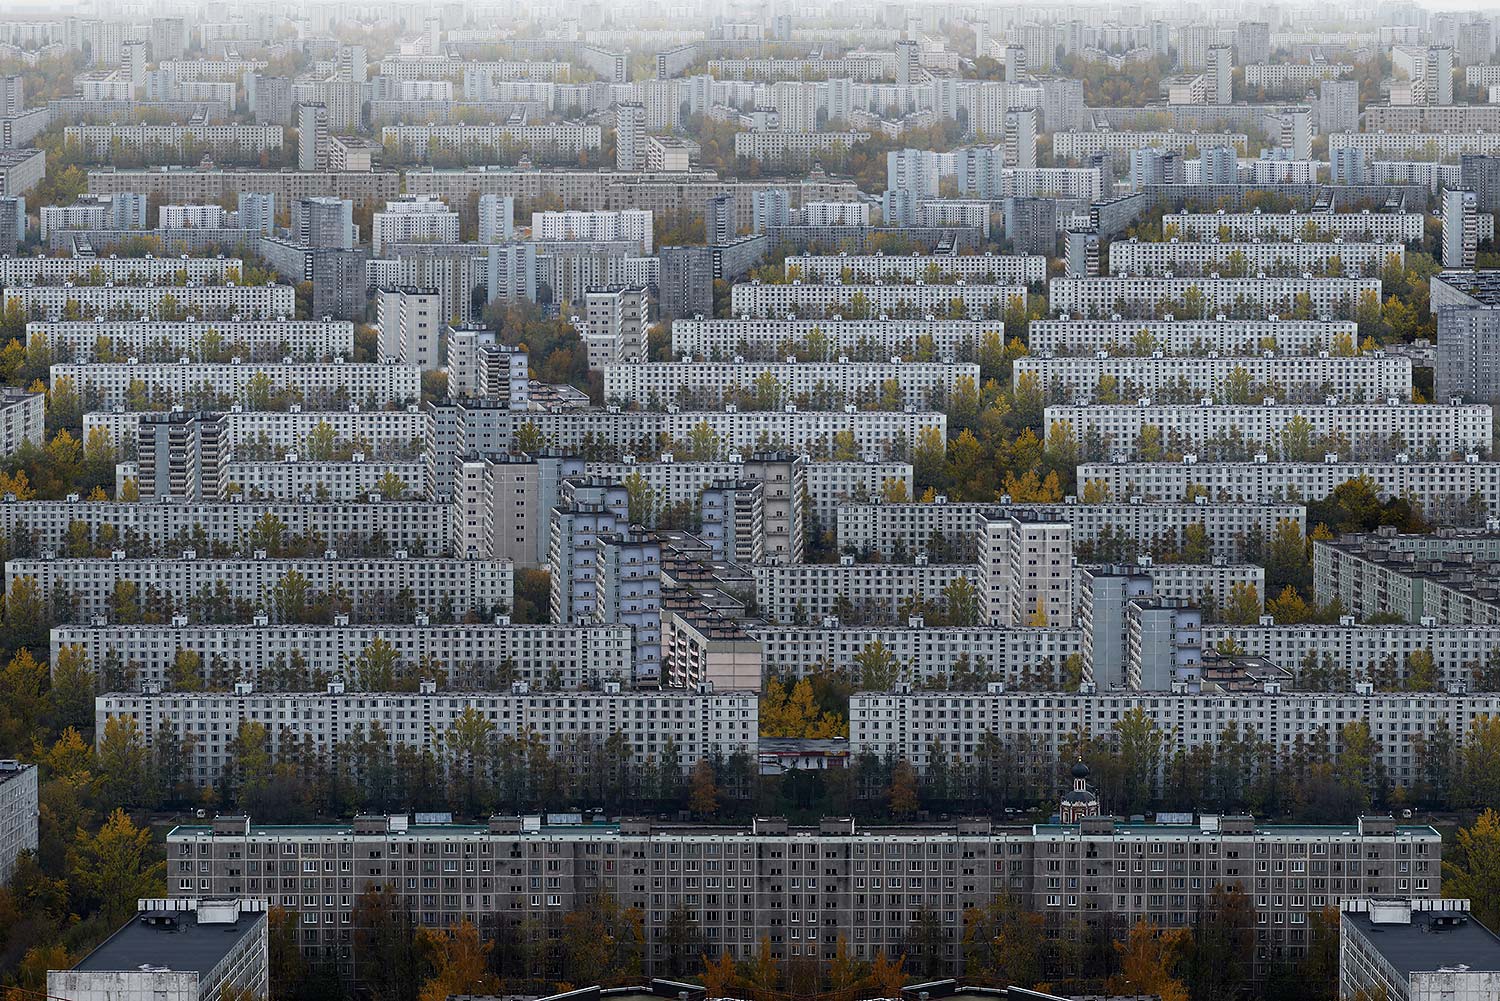 BRIC III - YUGO-ZAPADNIY OKRYG, MOSCOW (2008)